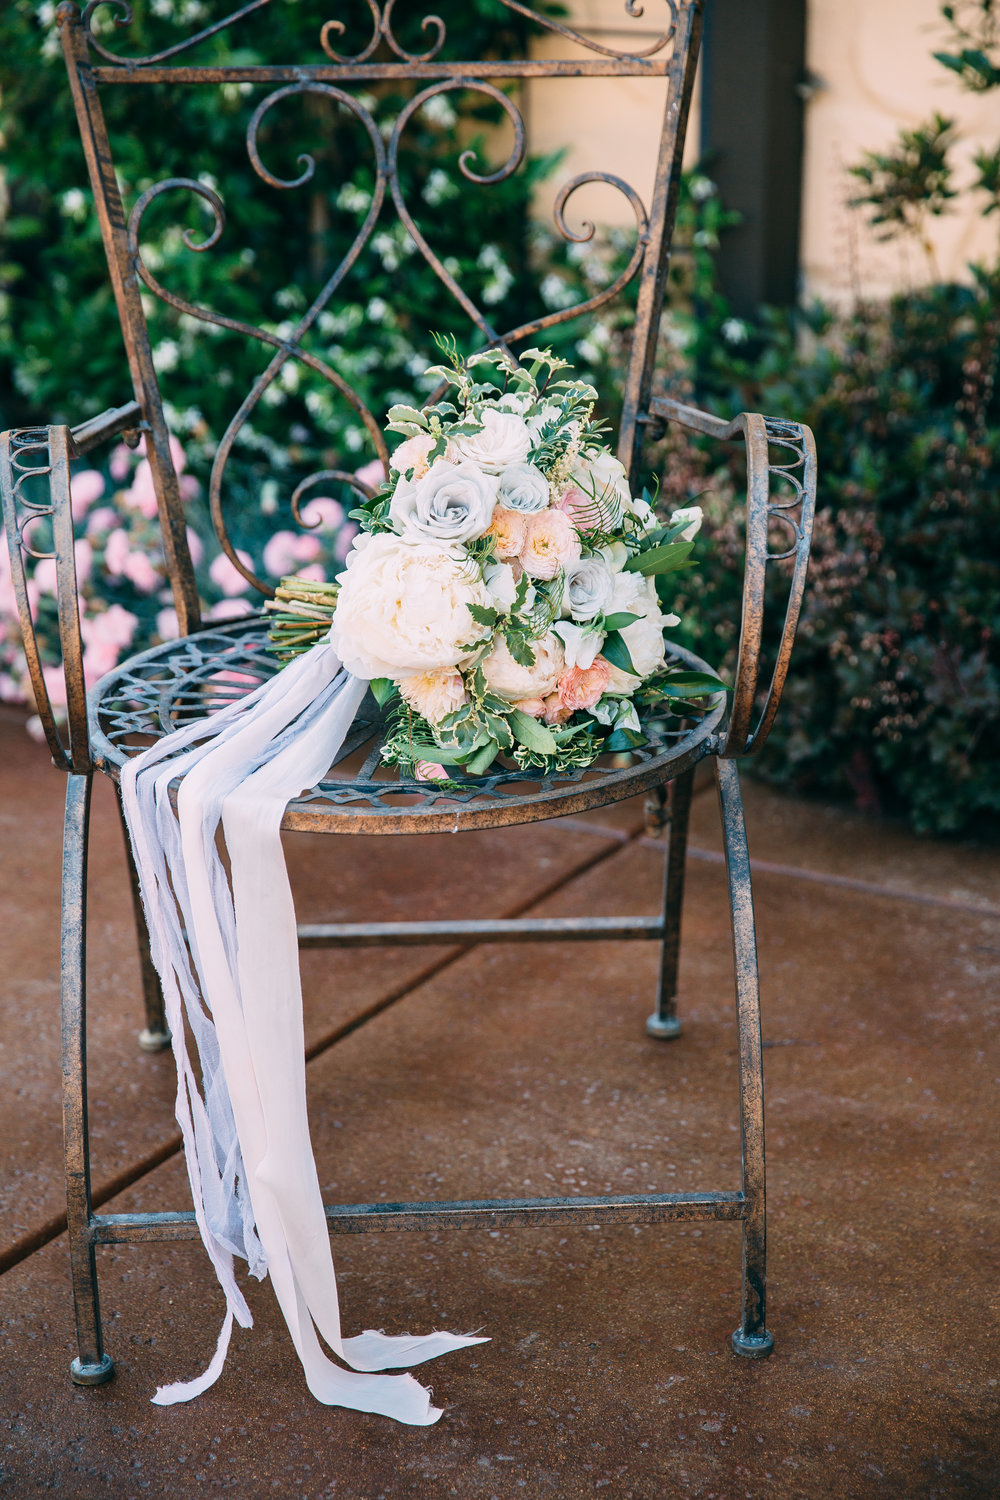 Violette-fleurs-anna-perevertaylo-White-Blush-elegant-flowers-for-wedding-decor-upscale-design-roseville-sacramento-california-rancho-robles-vinyards-lincoln-elegant-luxury-blush-bridal-bouquet-flowing-long-silk-ribbon.jpg